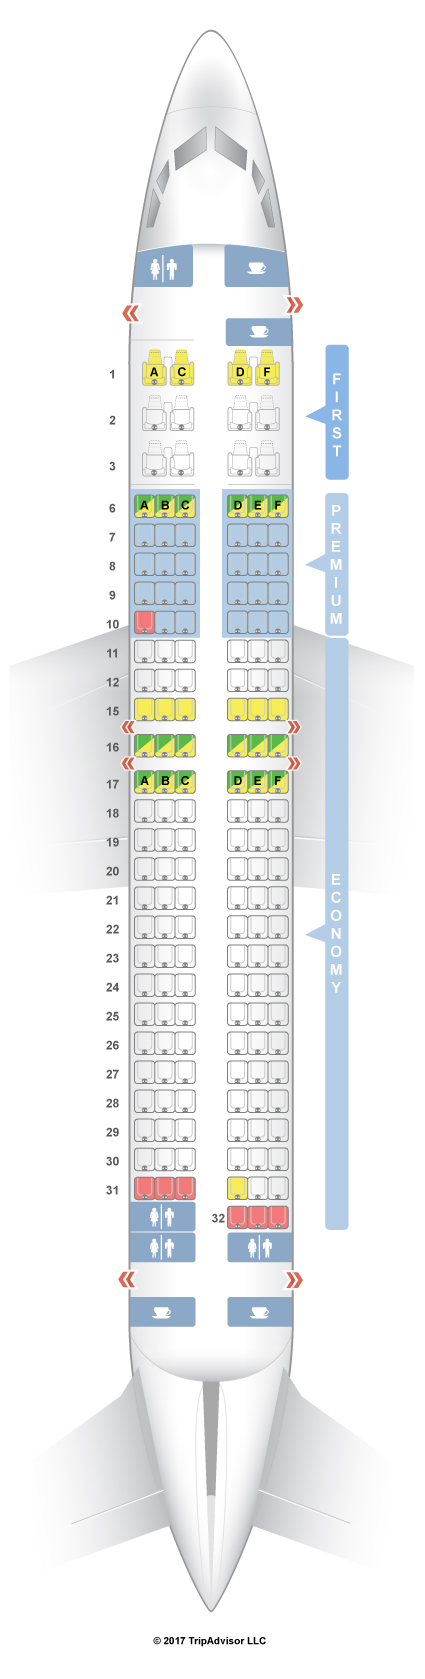 alaska airlines seat map key